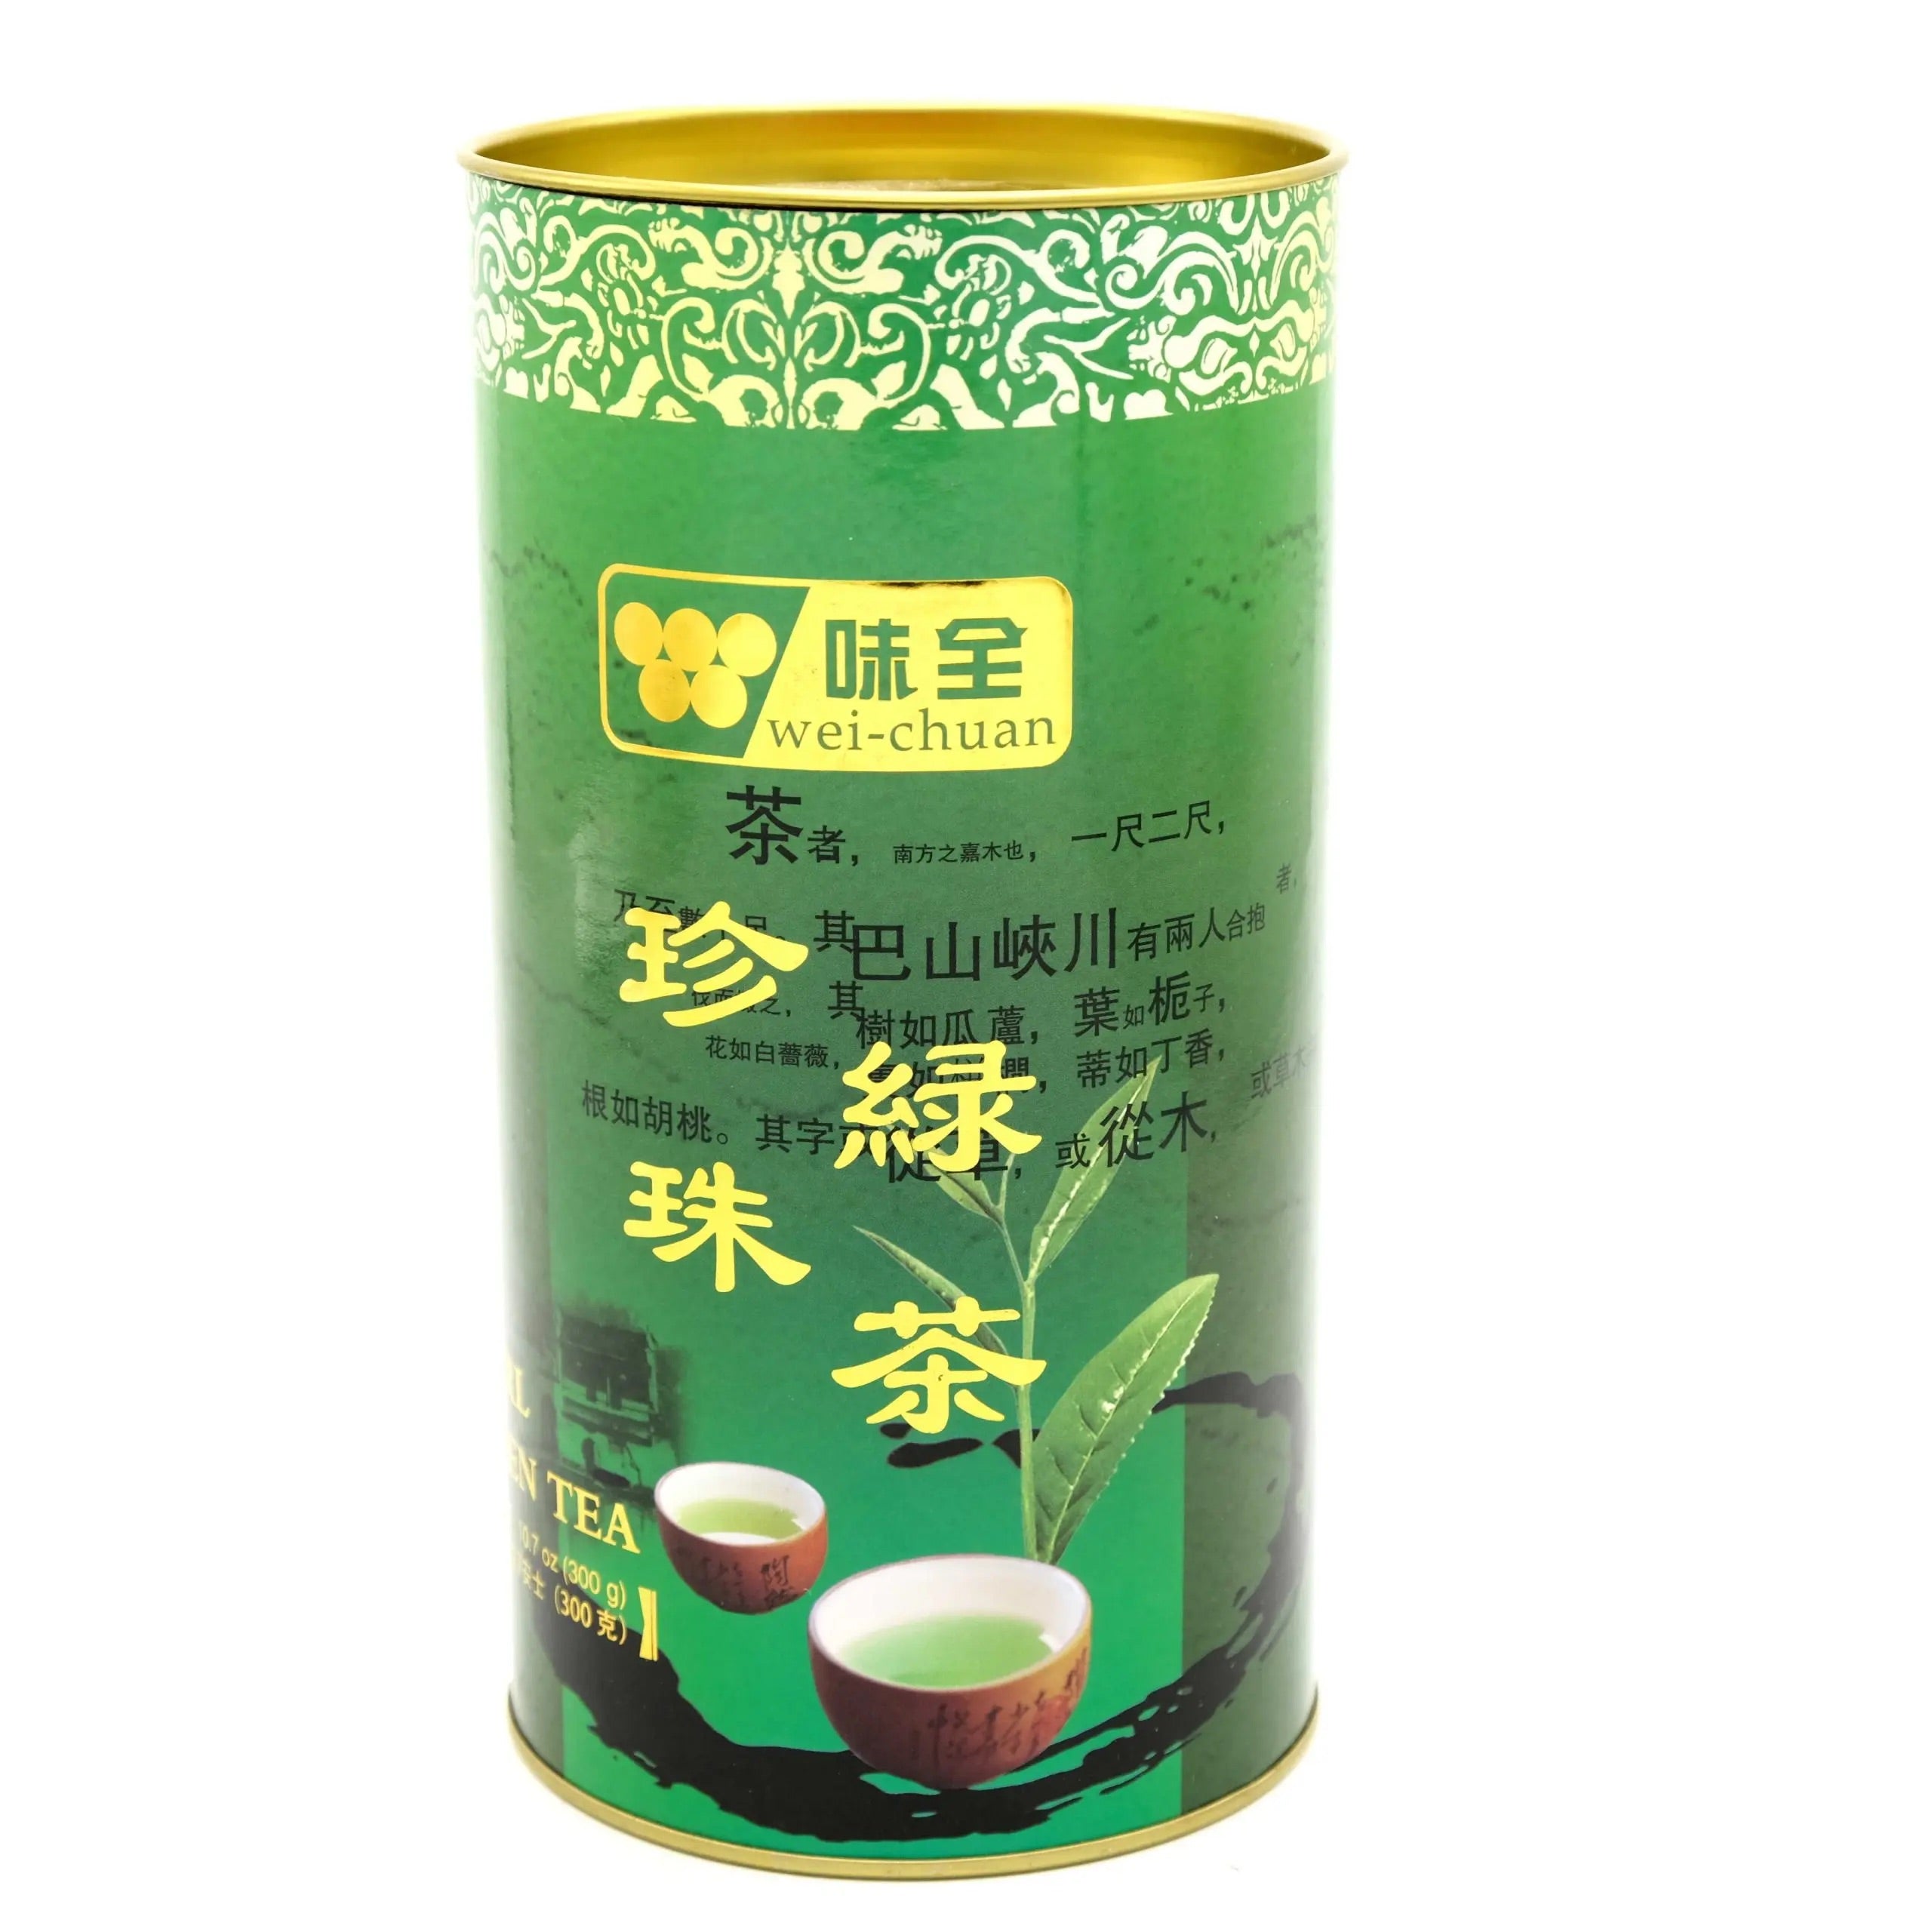 味全-珍珠绿茶300g – Ginkgo Market